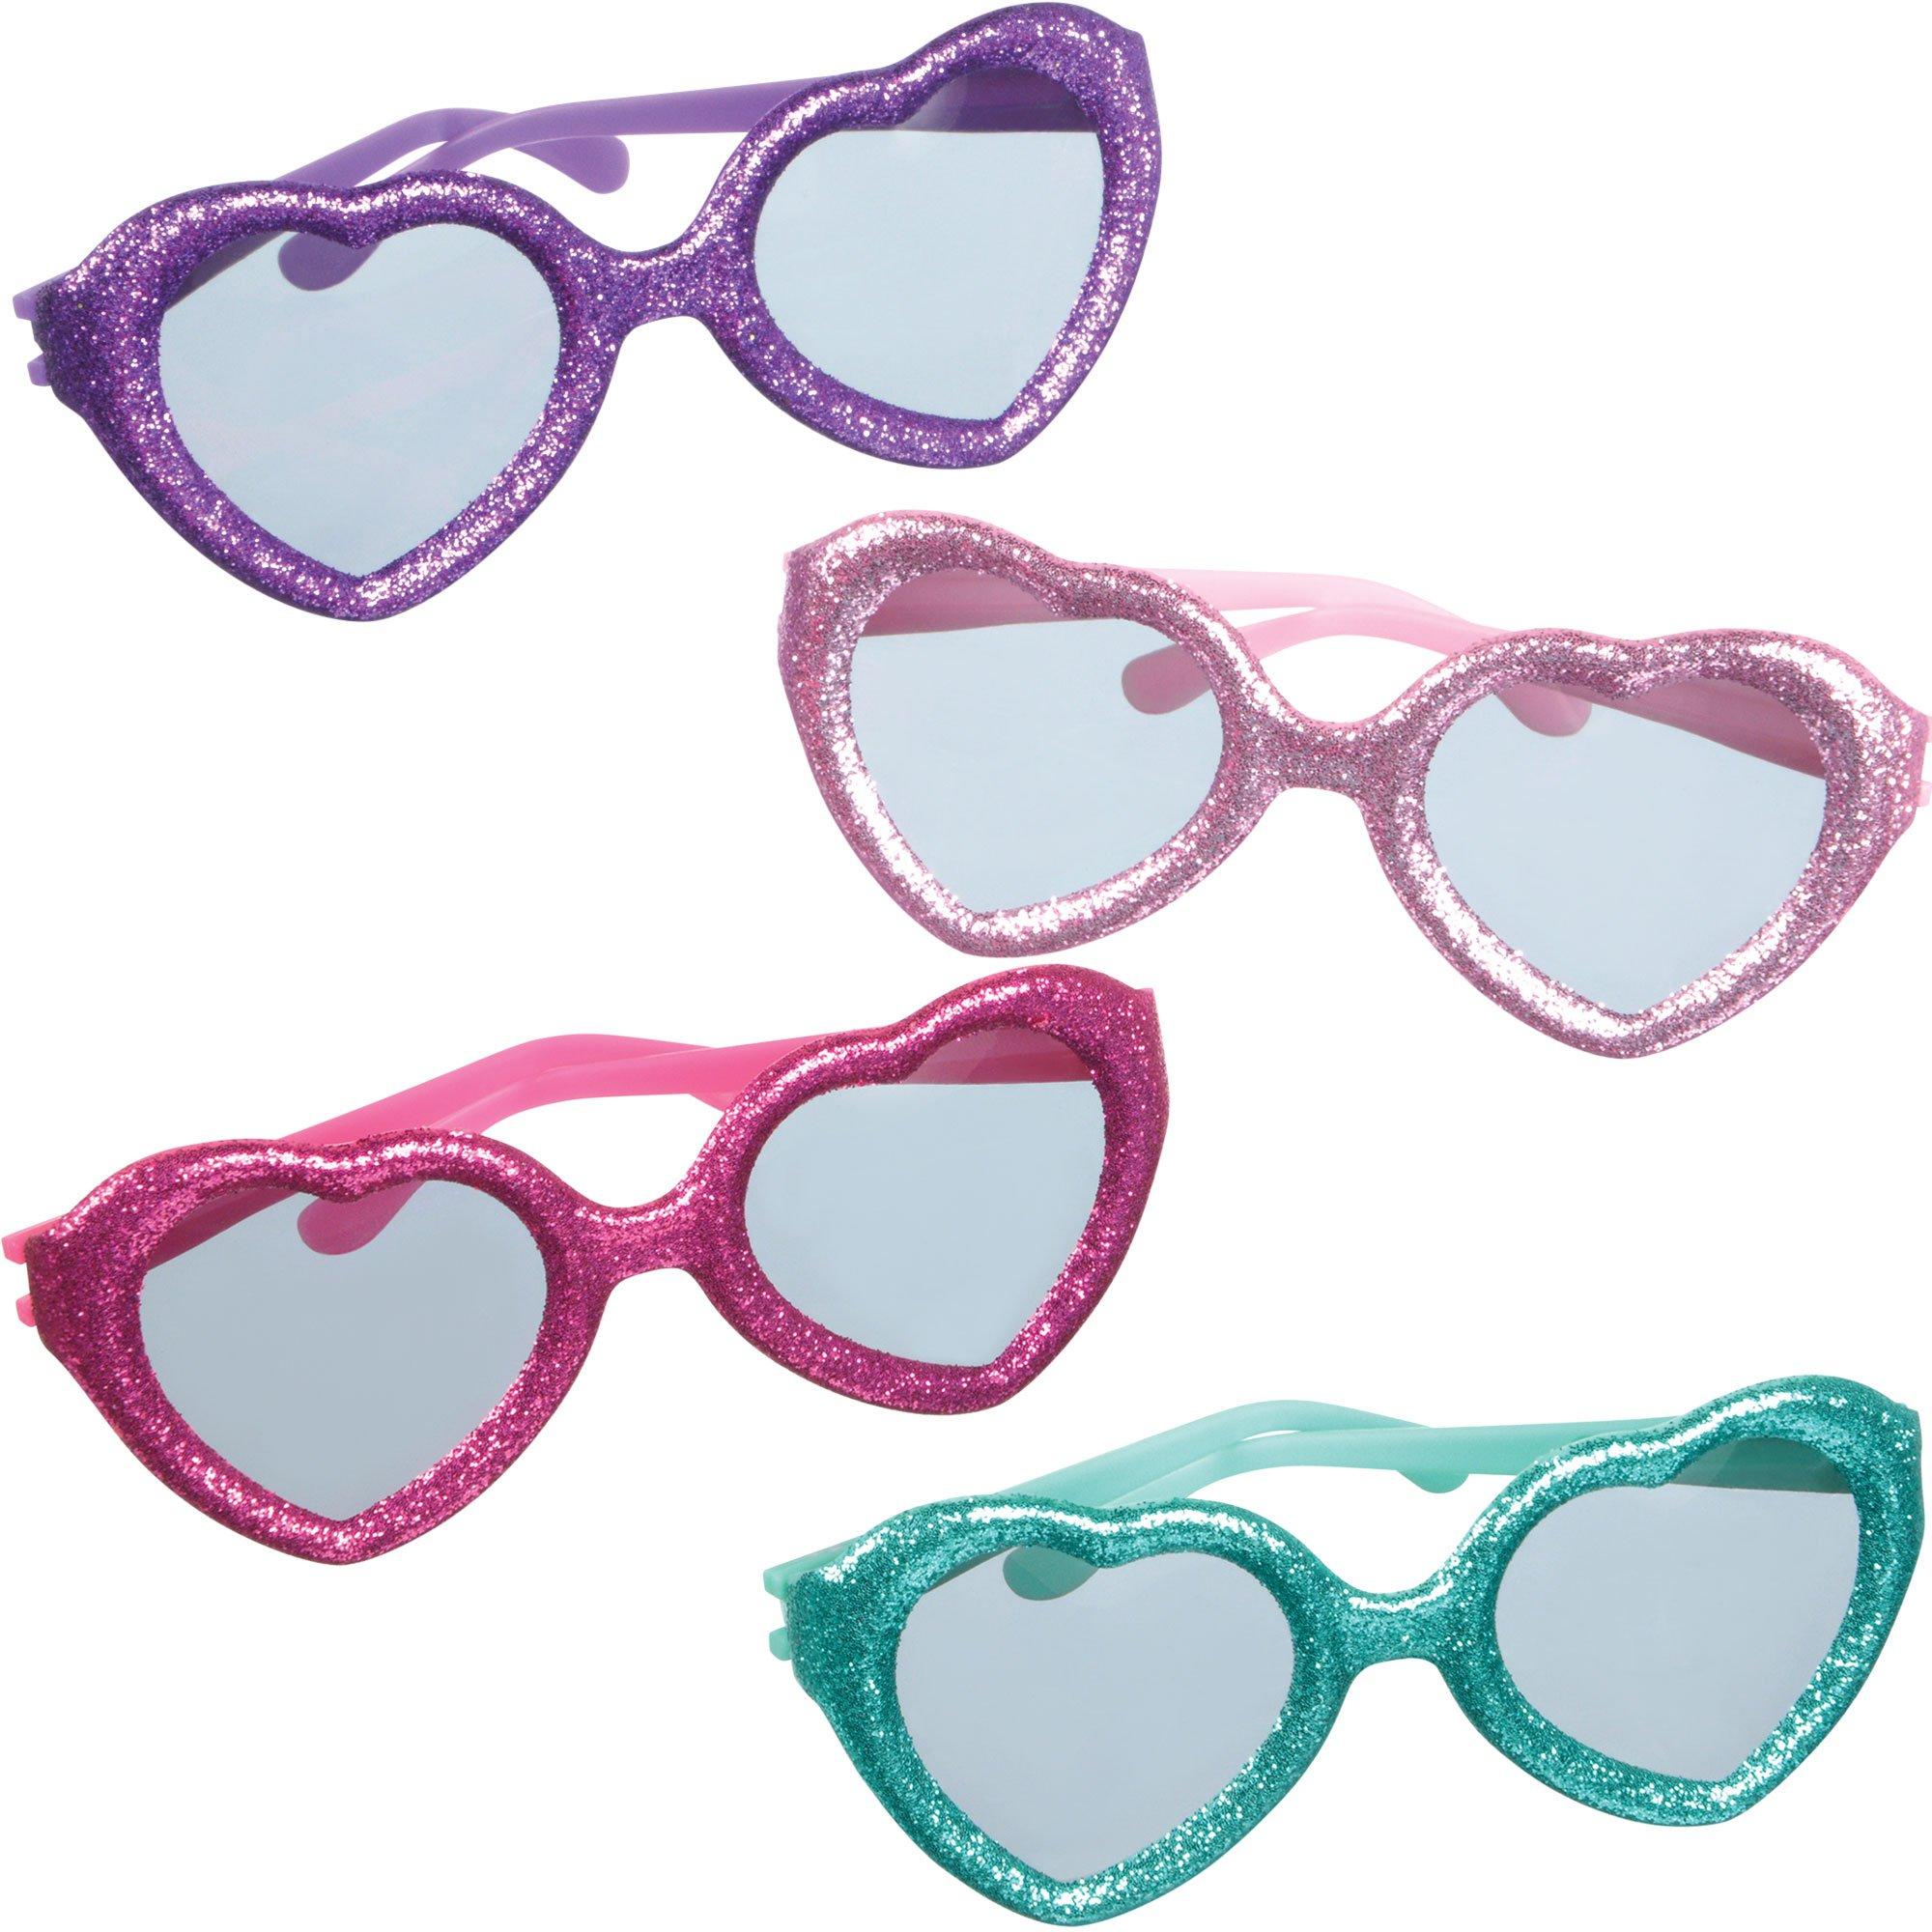 Glitter Heart Glasses 12ct